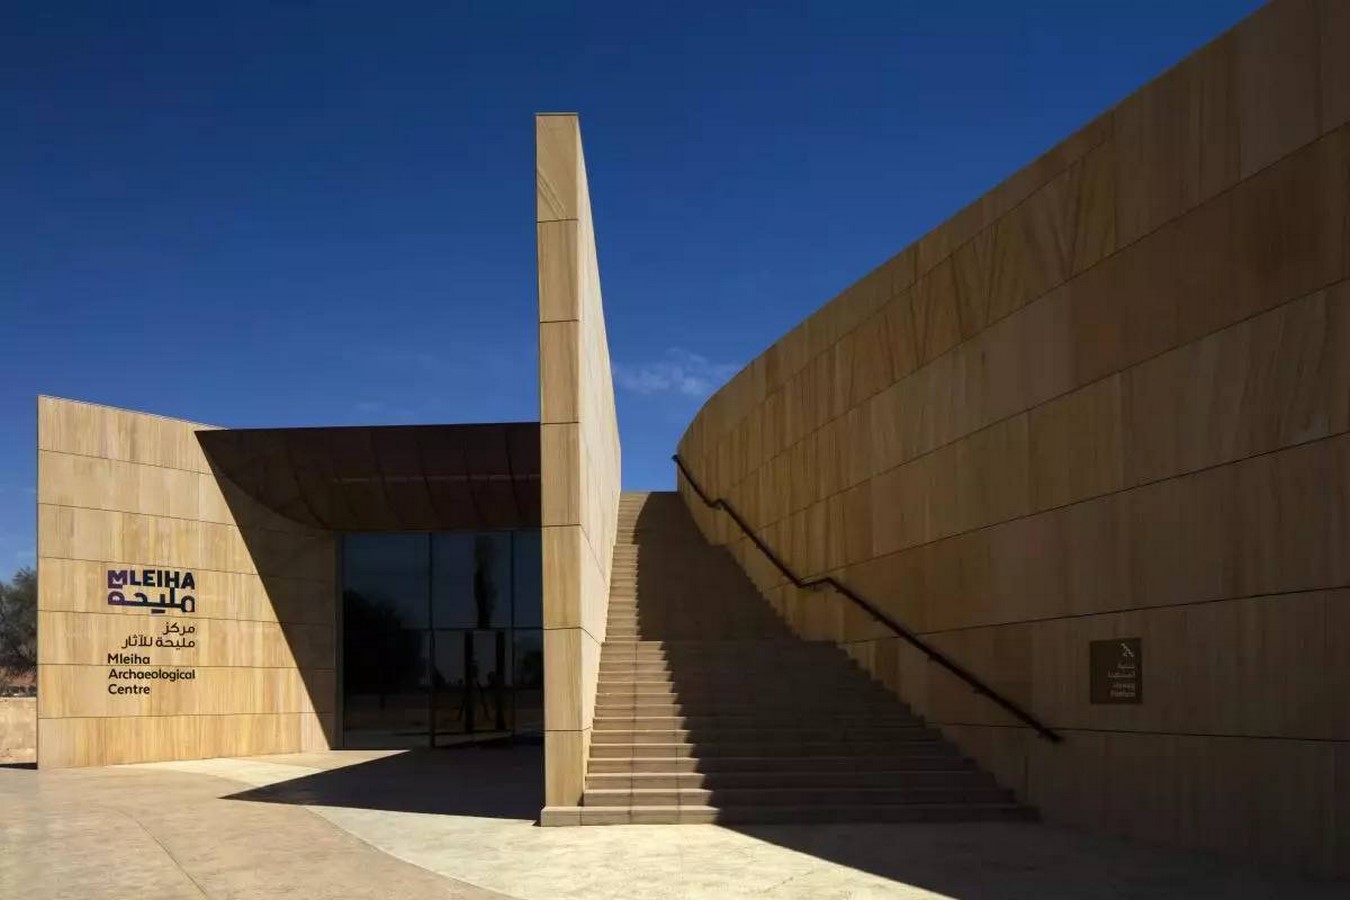 Mleiha Archaeological Centre - Sheet2